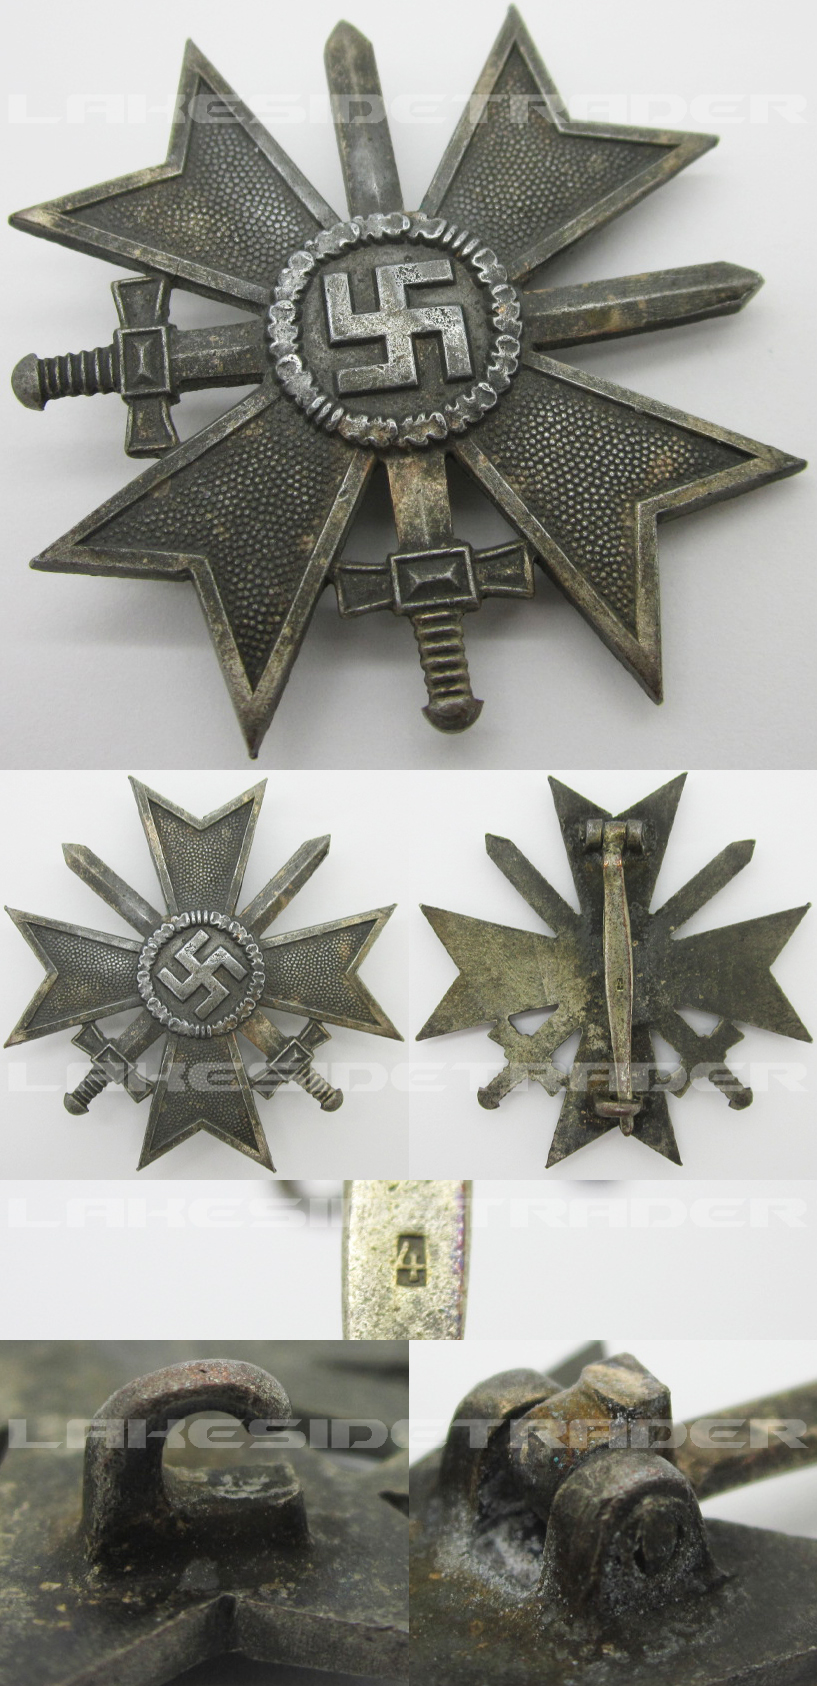 1st Class War Merit Cross with Swords by 4